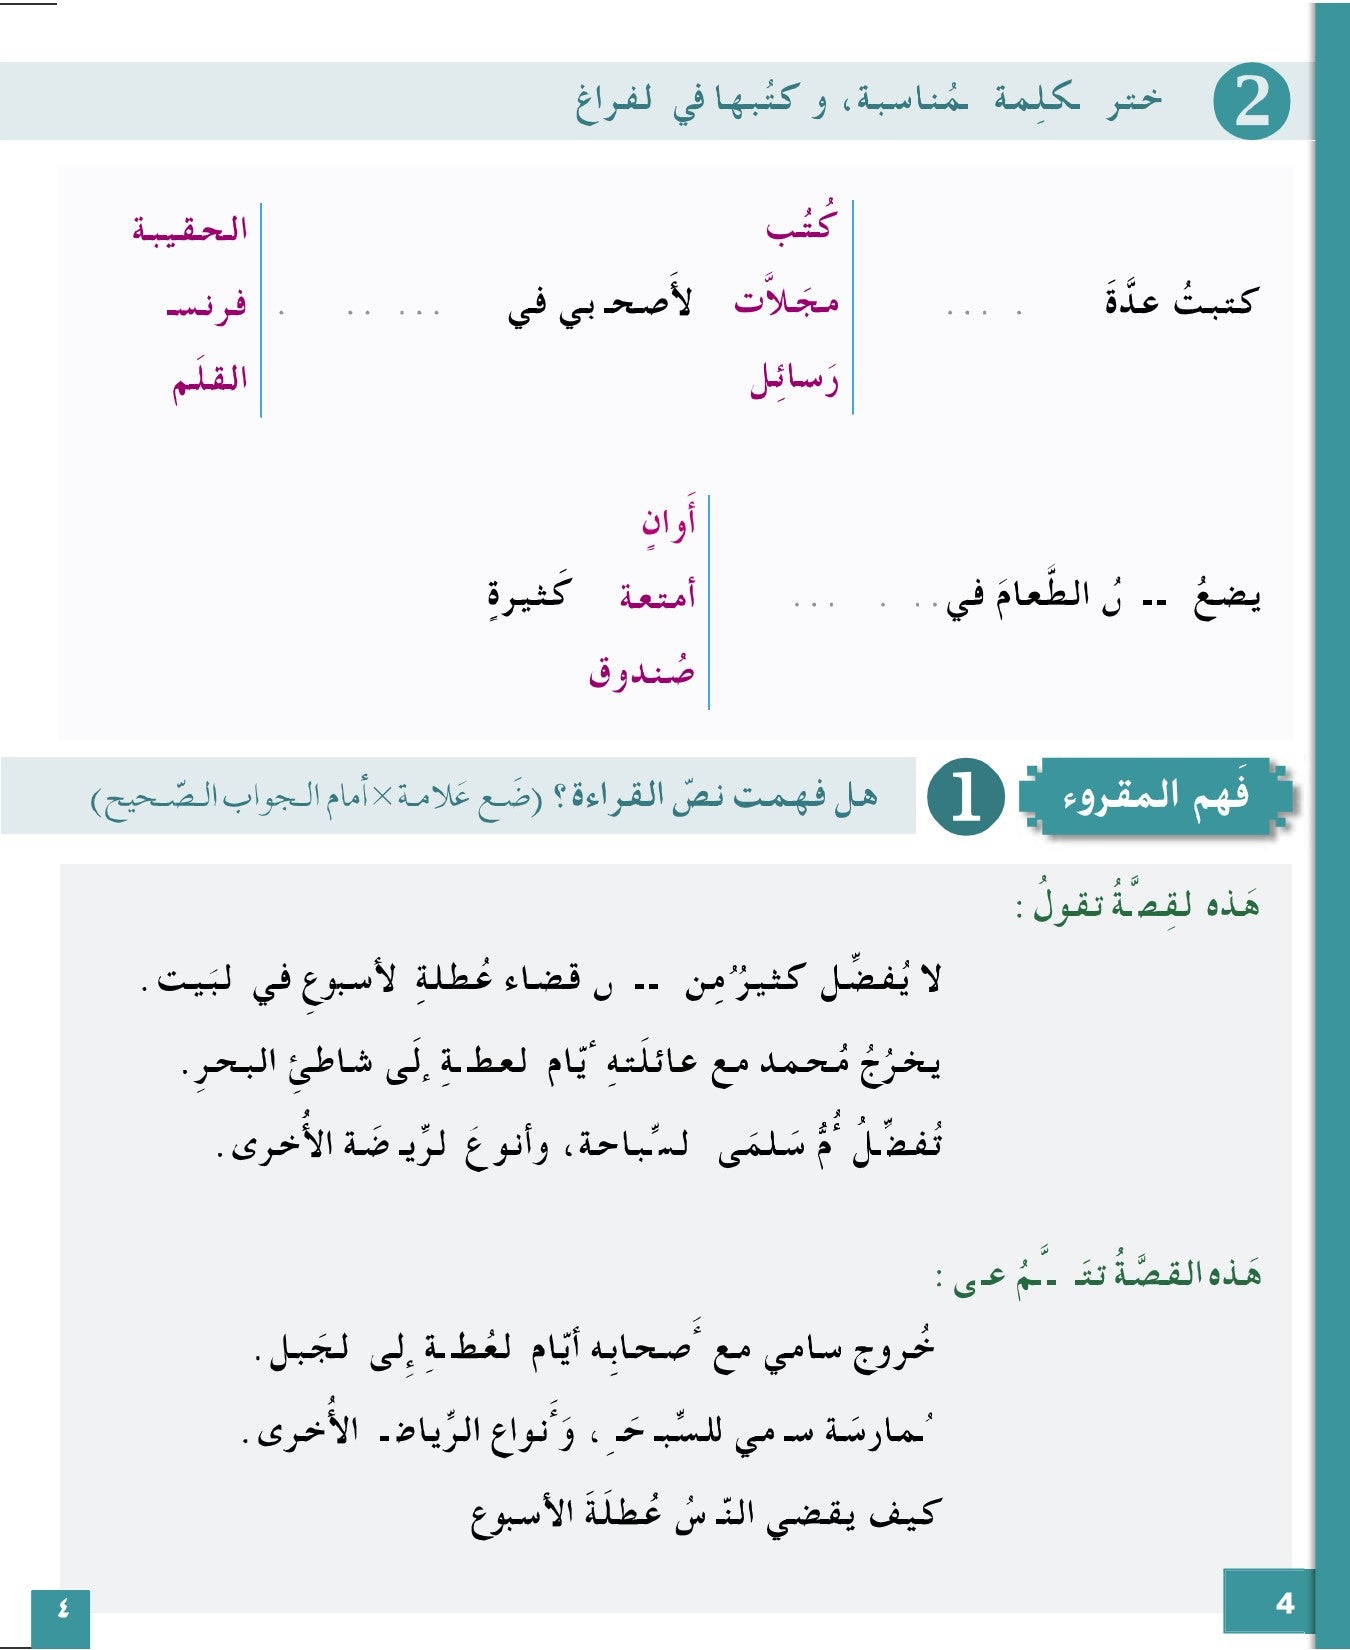 I Love and Learn Arabic (أحب و أتعلم العربية) - Level 4 - Workbook